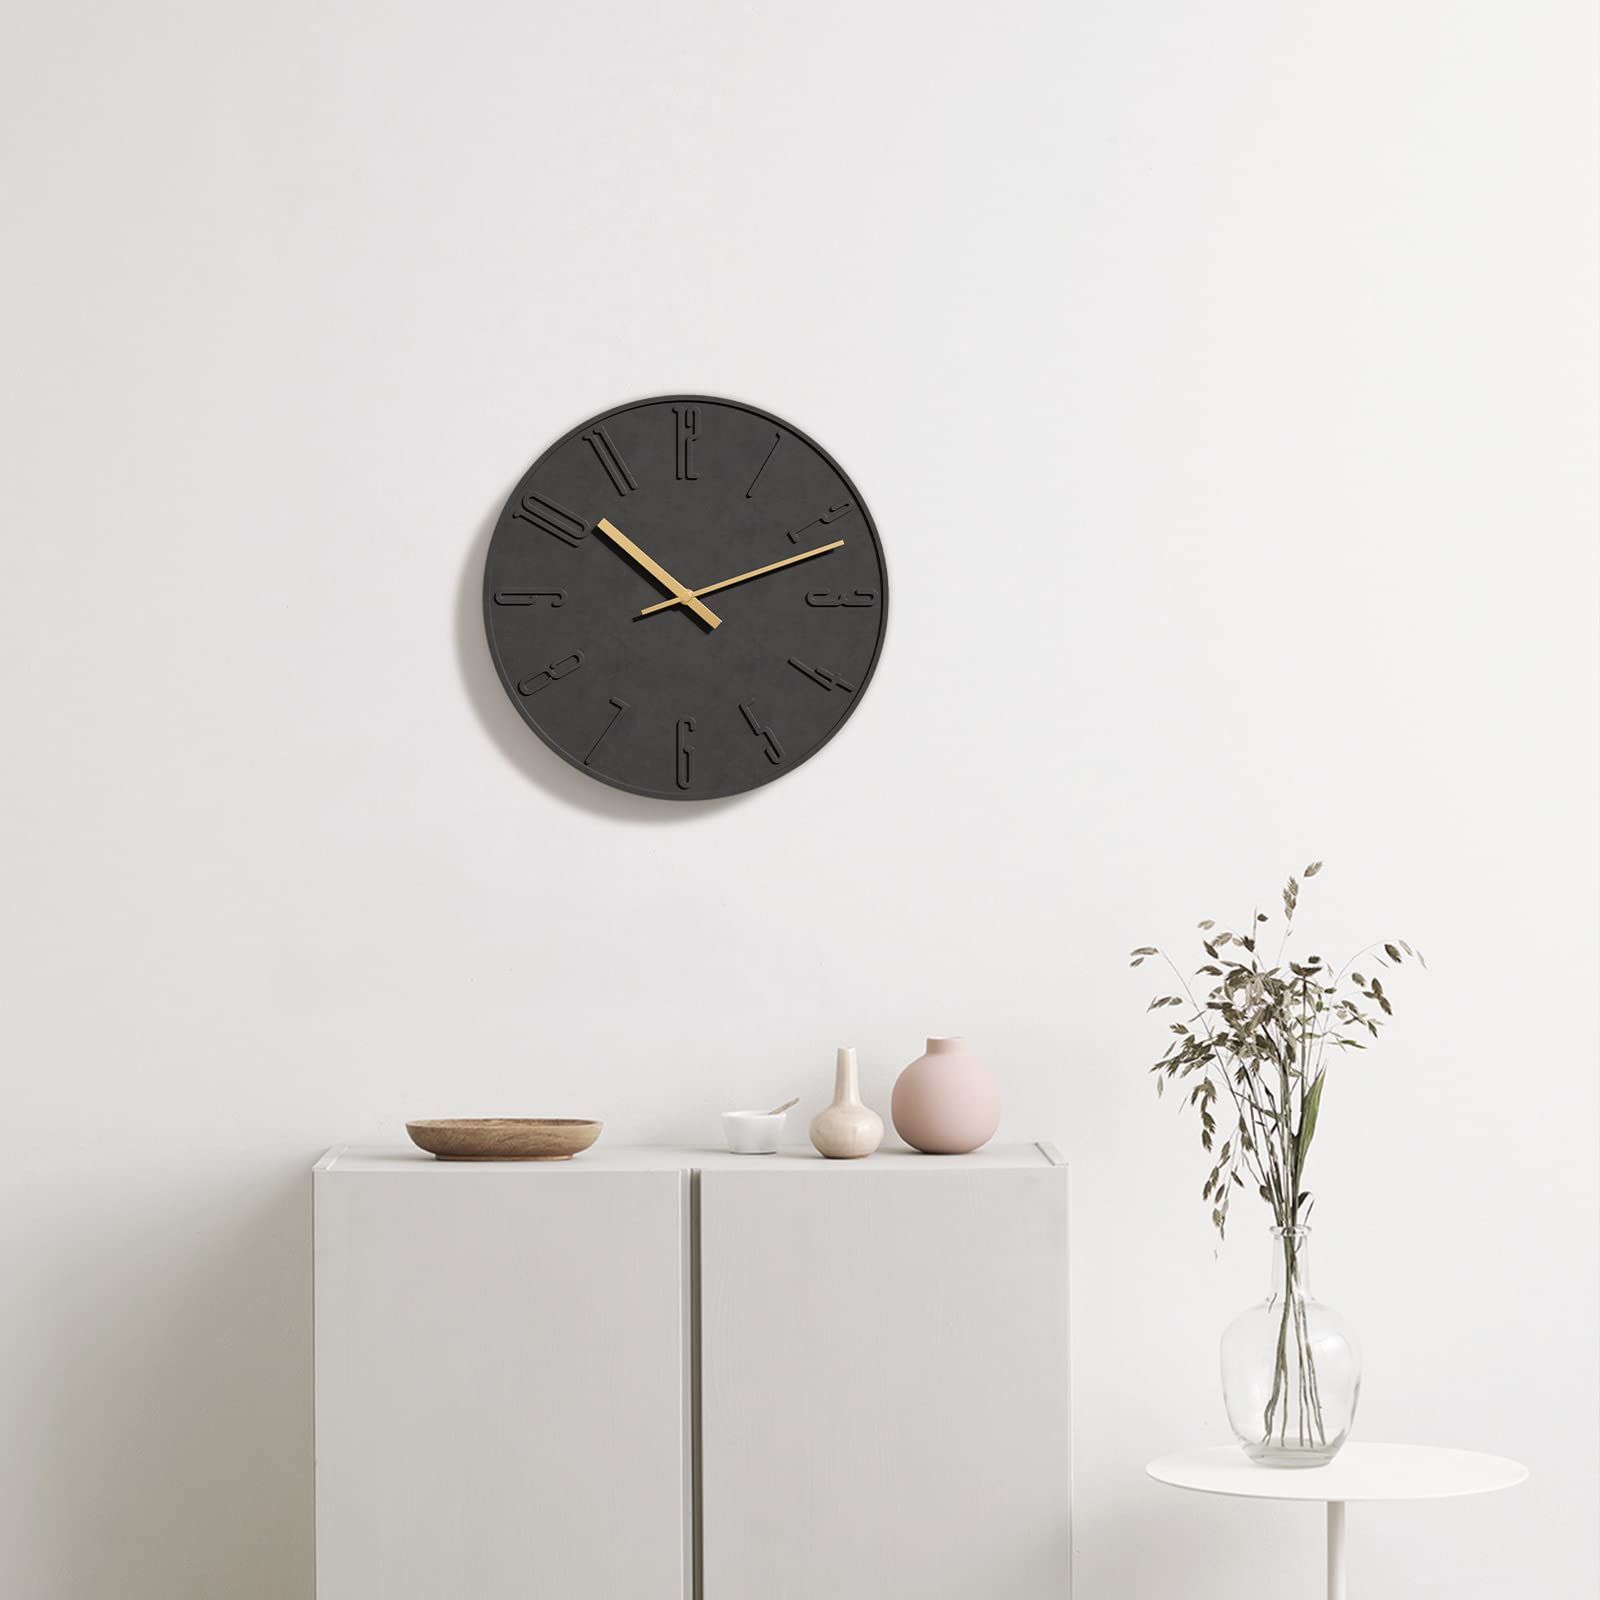 TAHITICA 壁掛け時計 コンクリート製 ブラック - インテリア時計